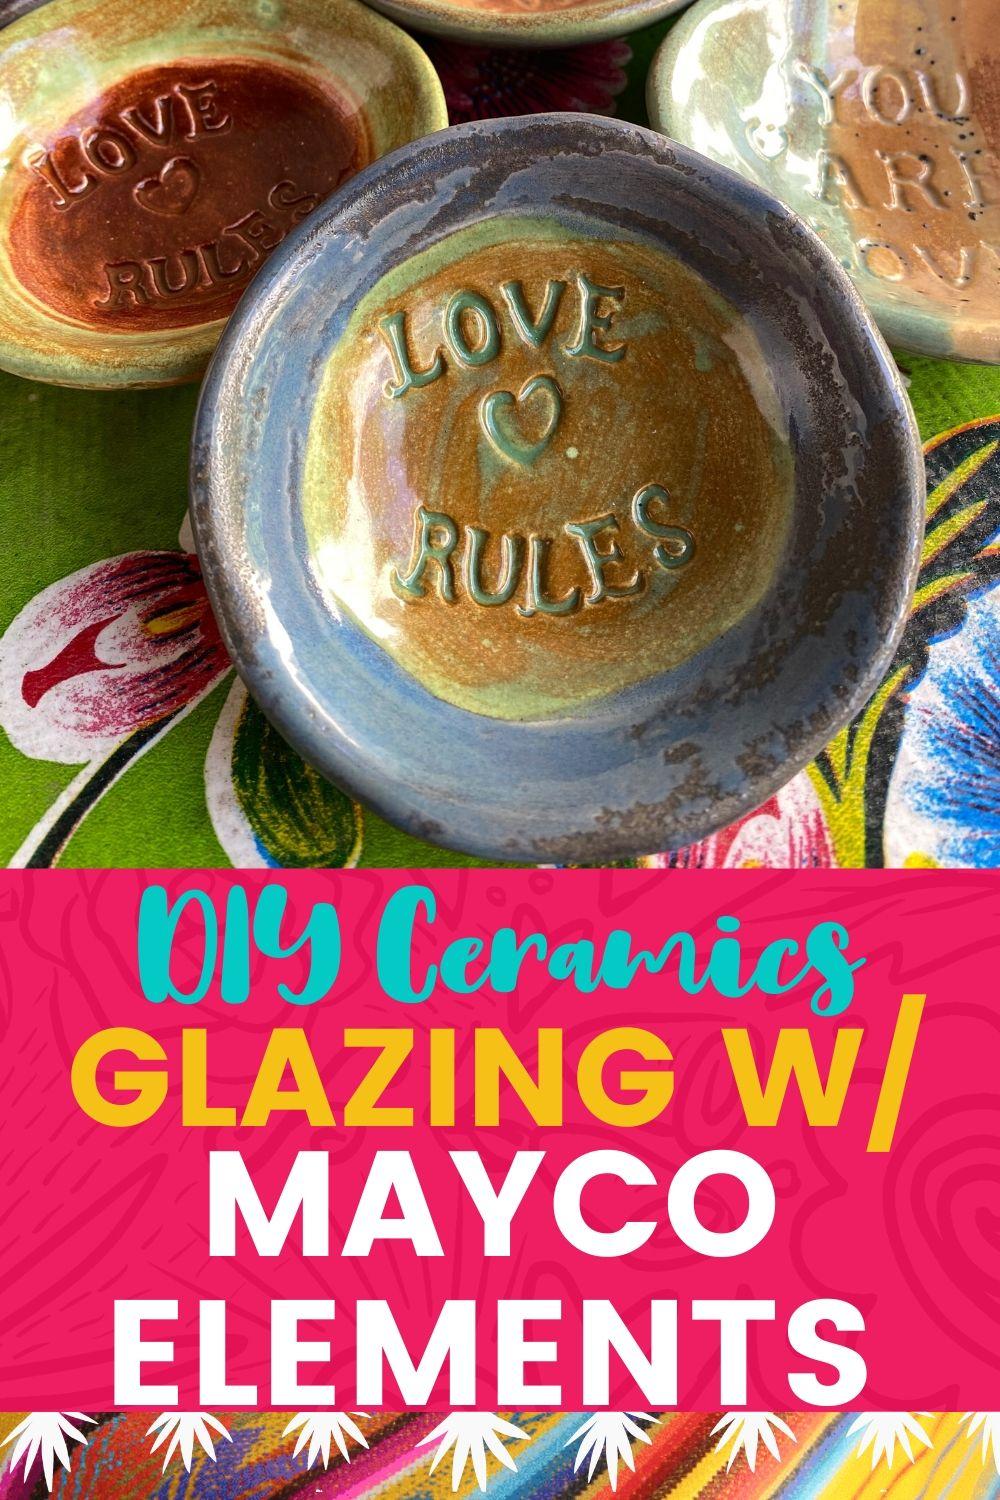 Glazing ceramics with Mayco Elements #craftychica #maycoelements #pyop